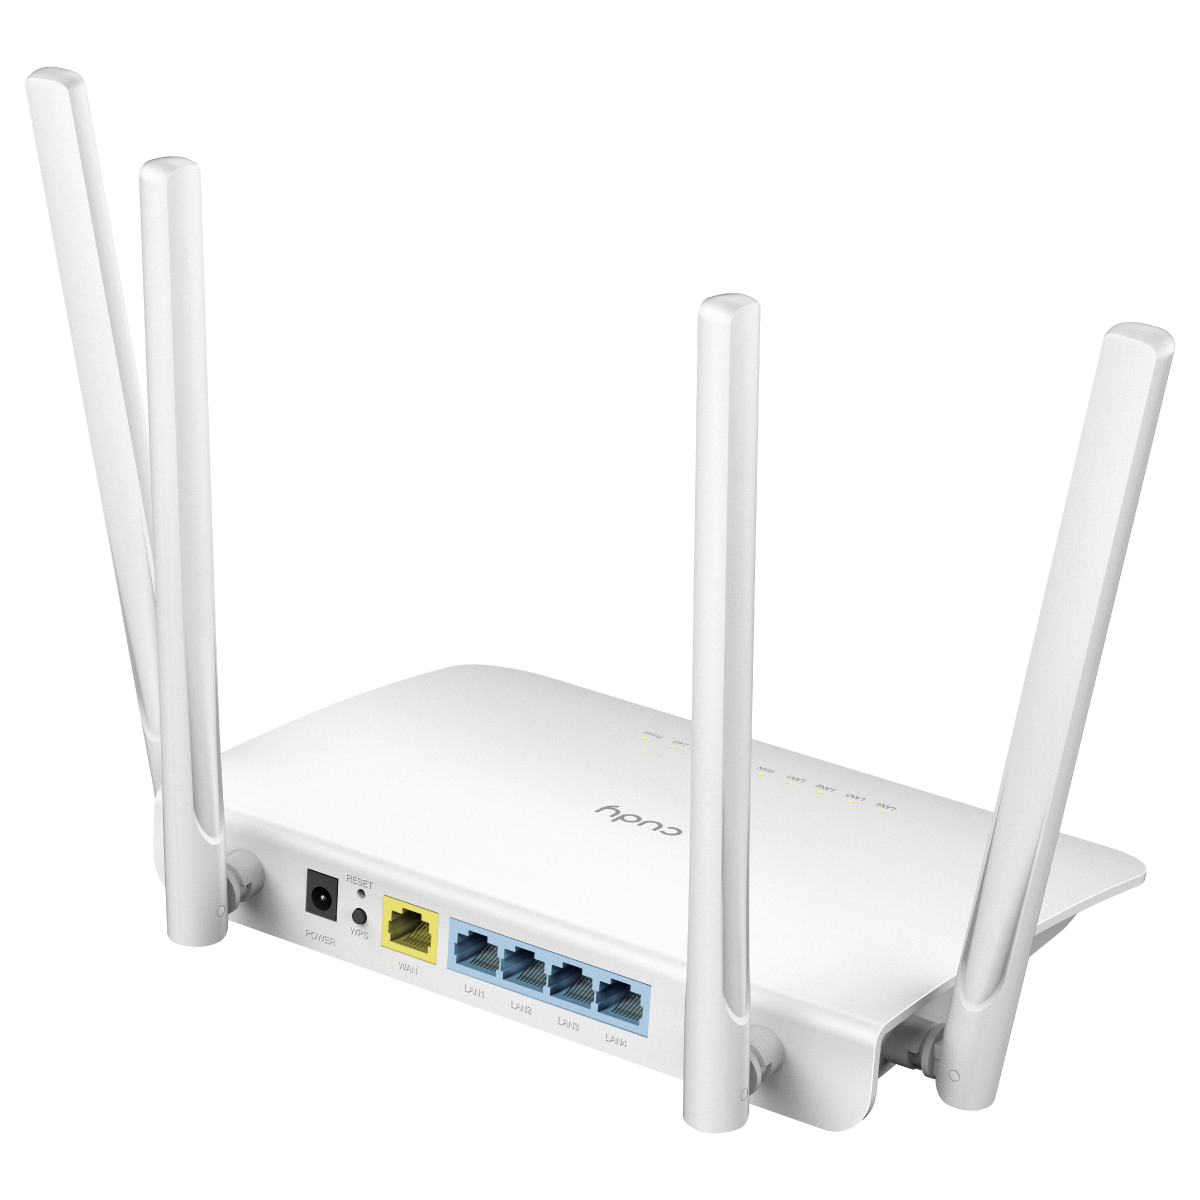 AC1200 Gigabit Mesh Wi-Fi Router, WR1300 3.0